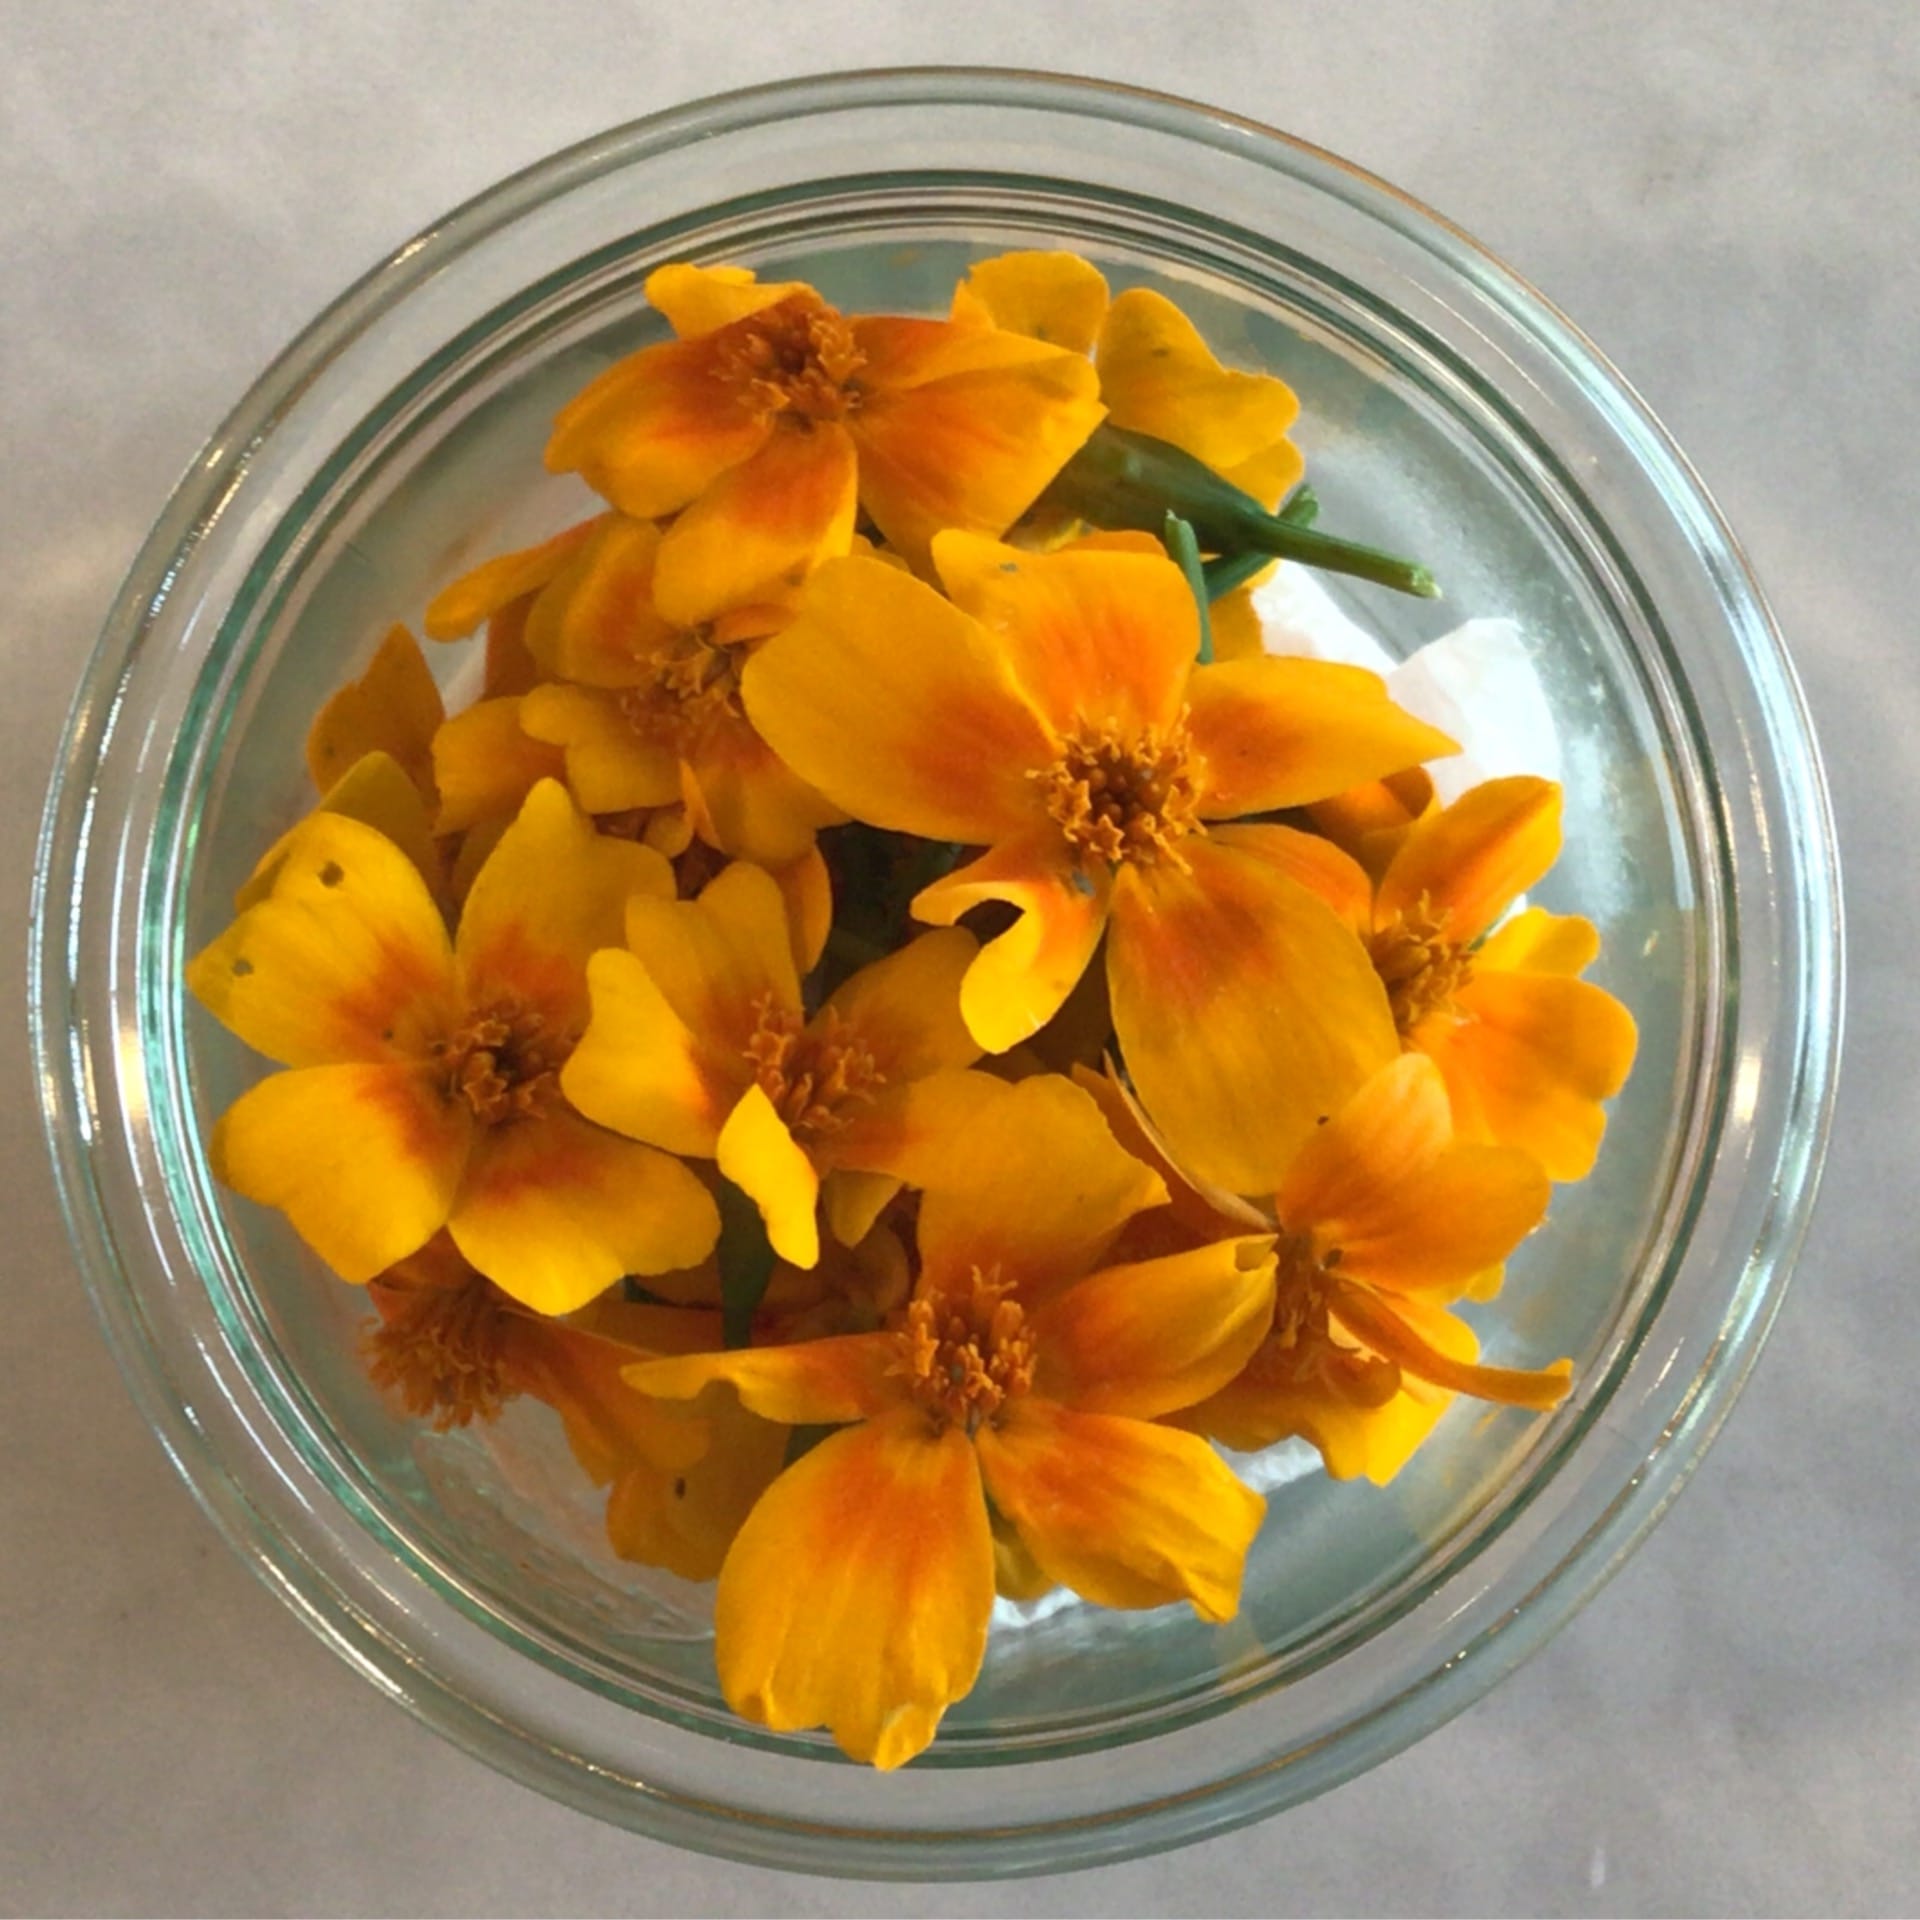 sold out edible marigold flowers plus jar deposit